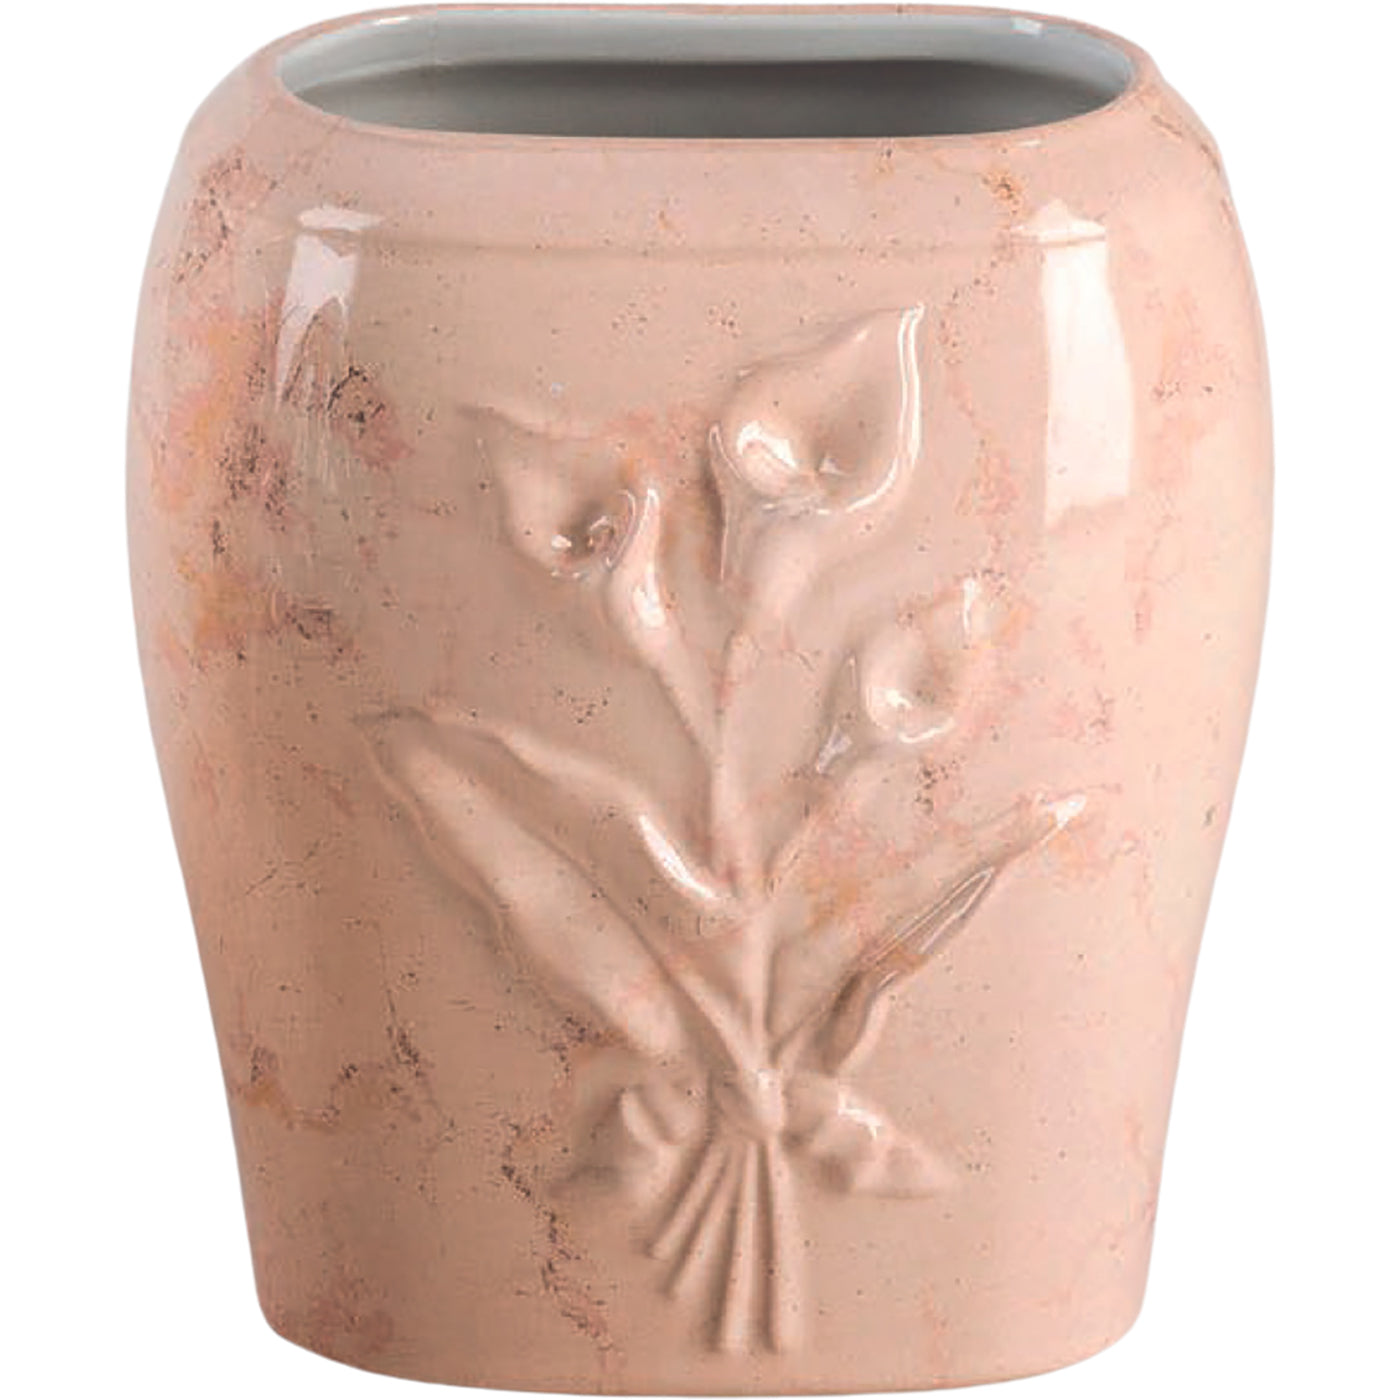 Rectangular grave vase Calla botticino 19x17cm - 7.5x6.7in In white porcelain with botticino decoration, ground attached CAL160T/BOTT